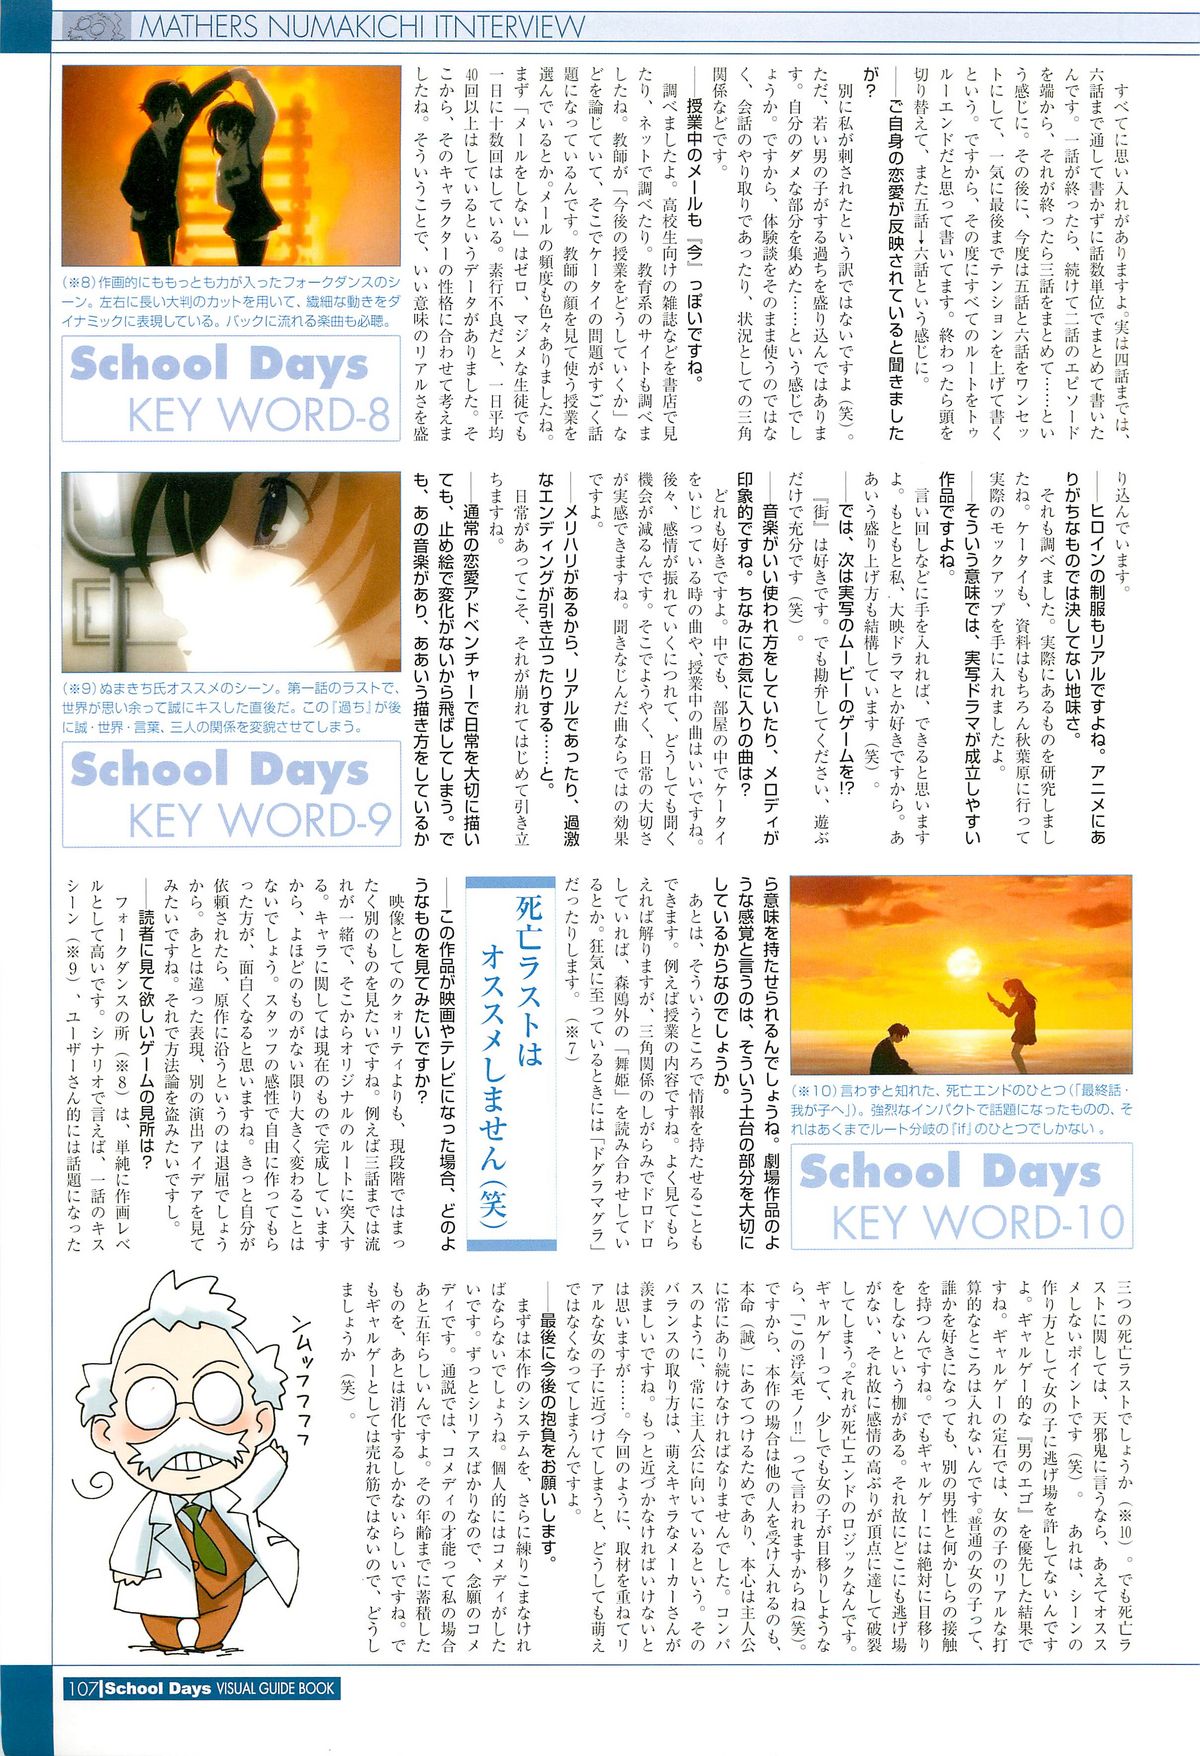 School Days ビジュアル・ガイドブック